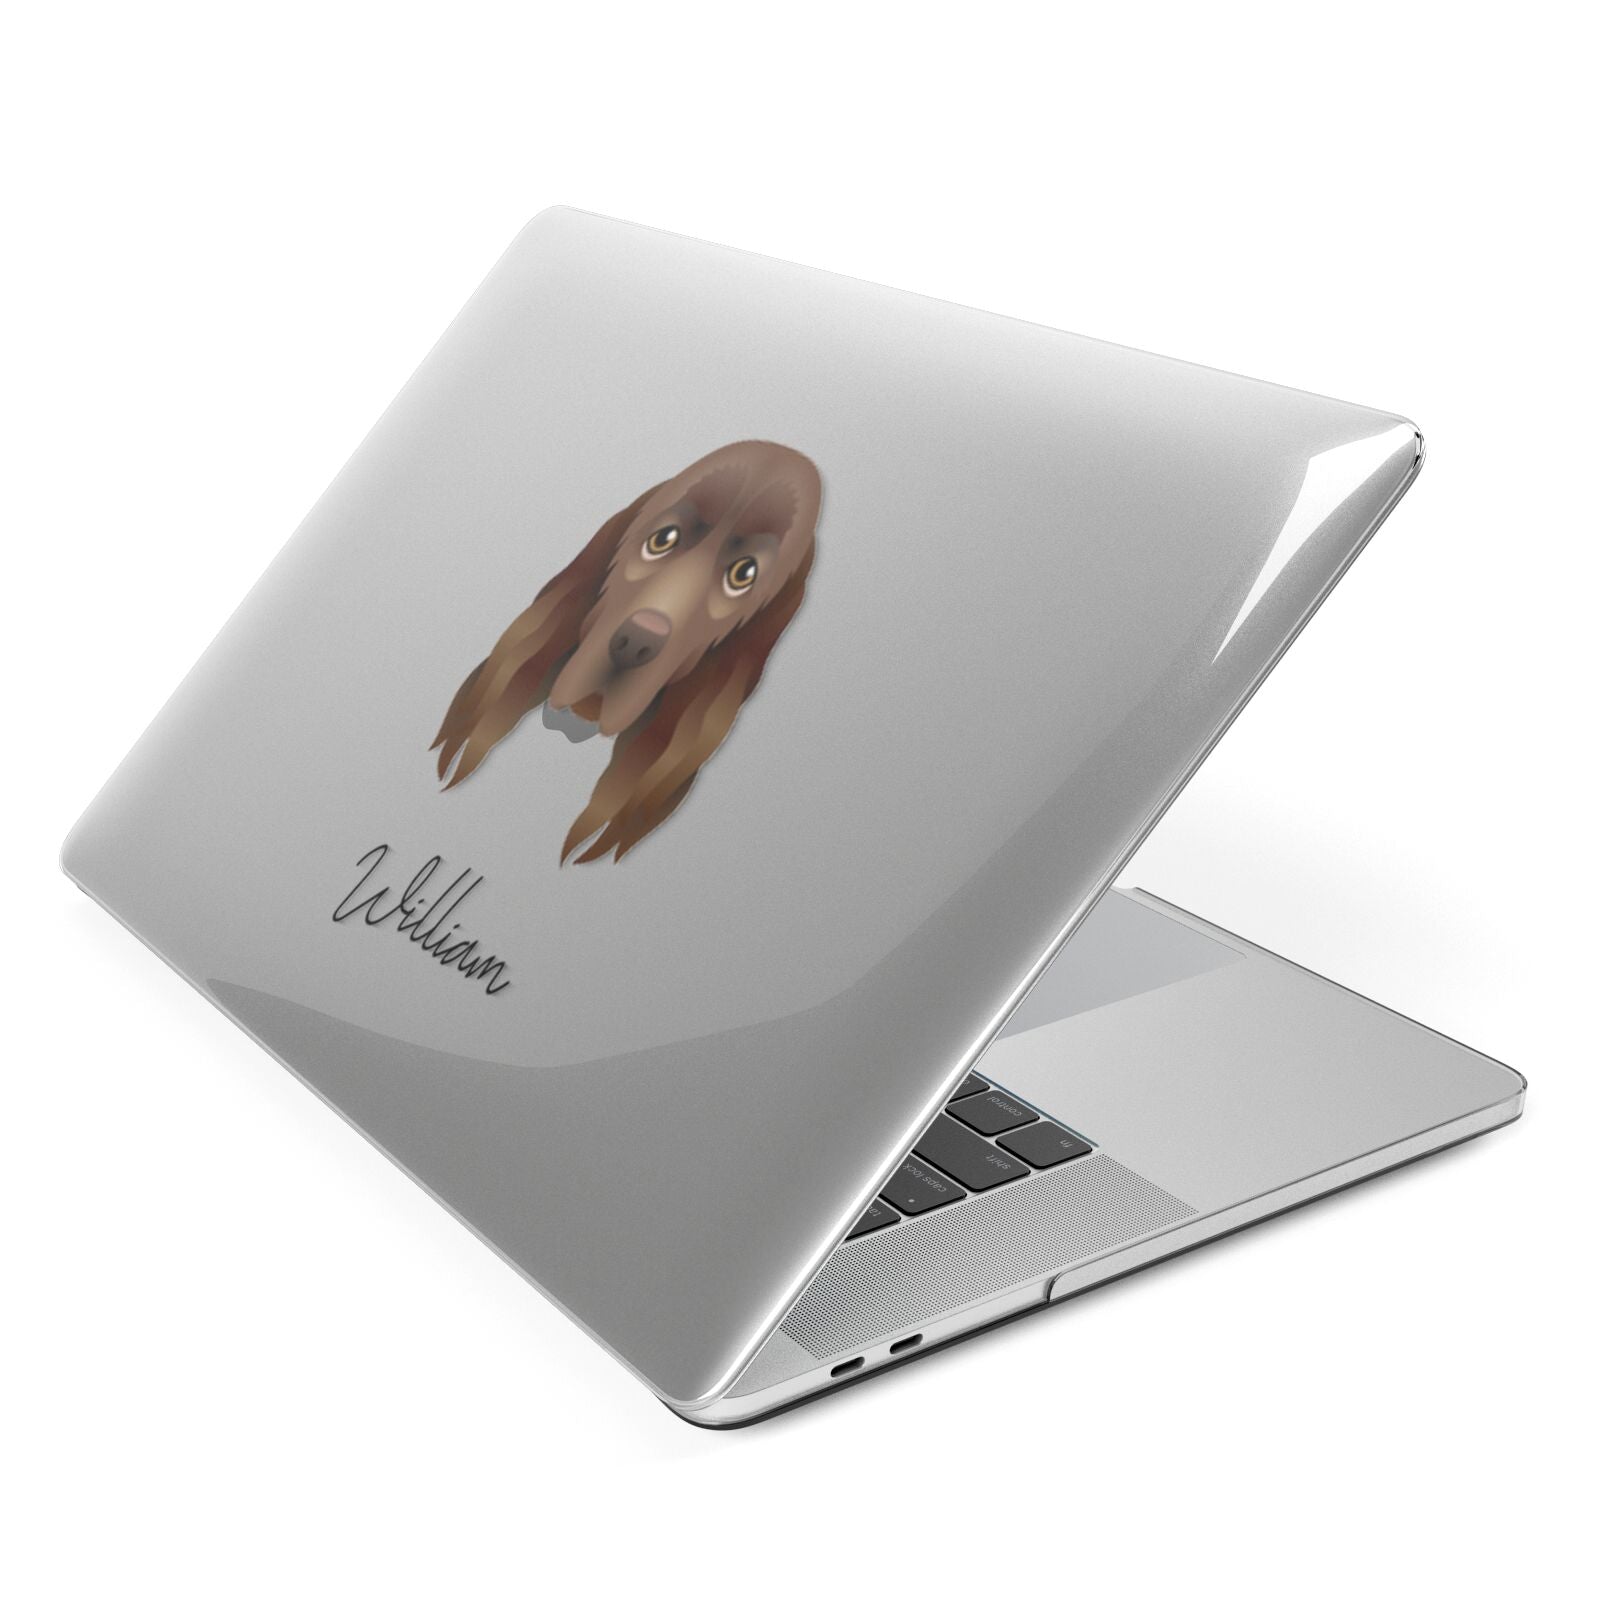 Sussex Spaniel Personalised Apple MacBook Case Side View